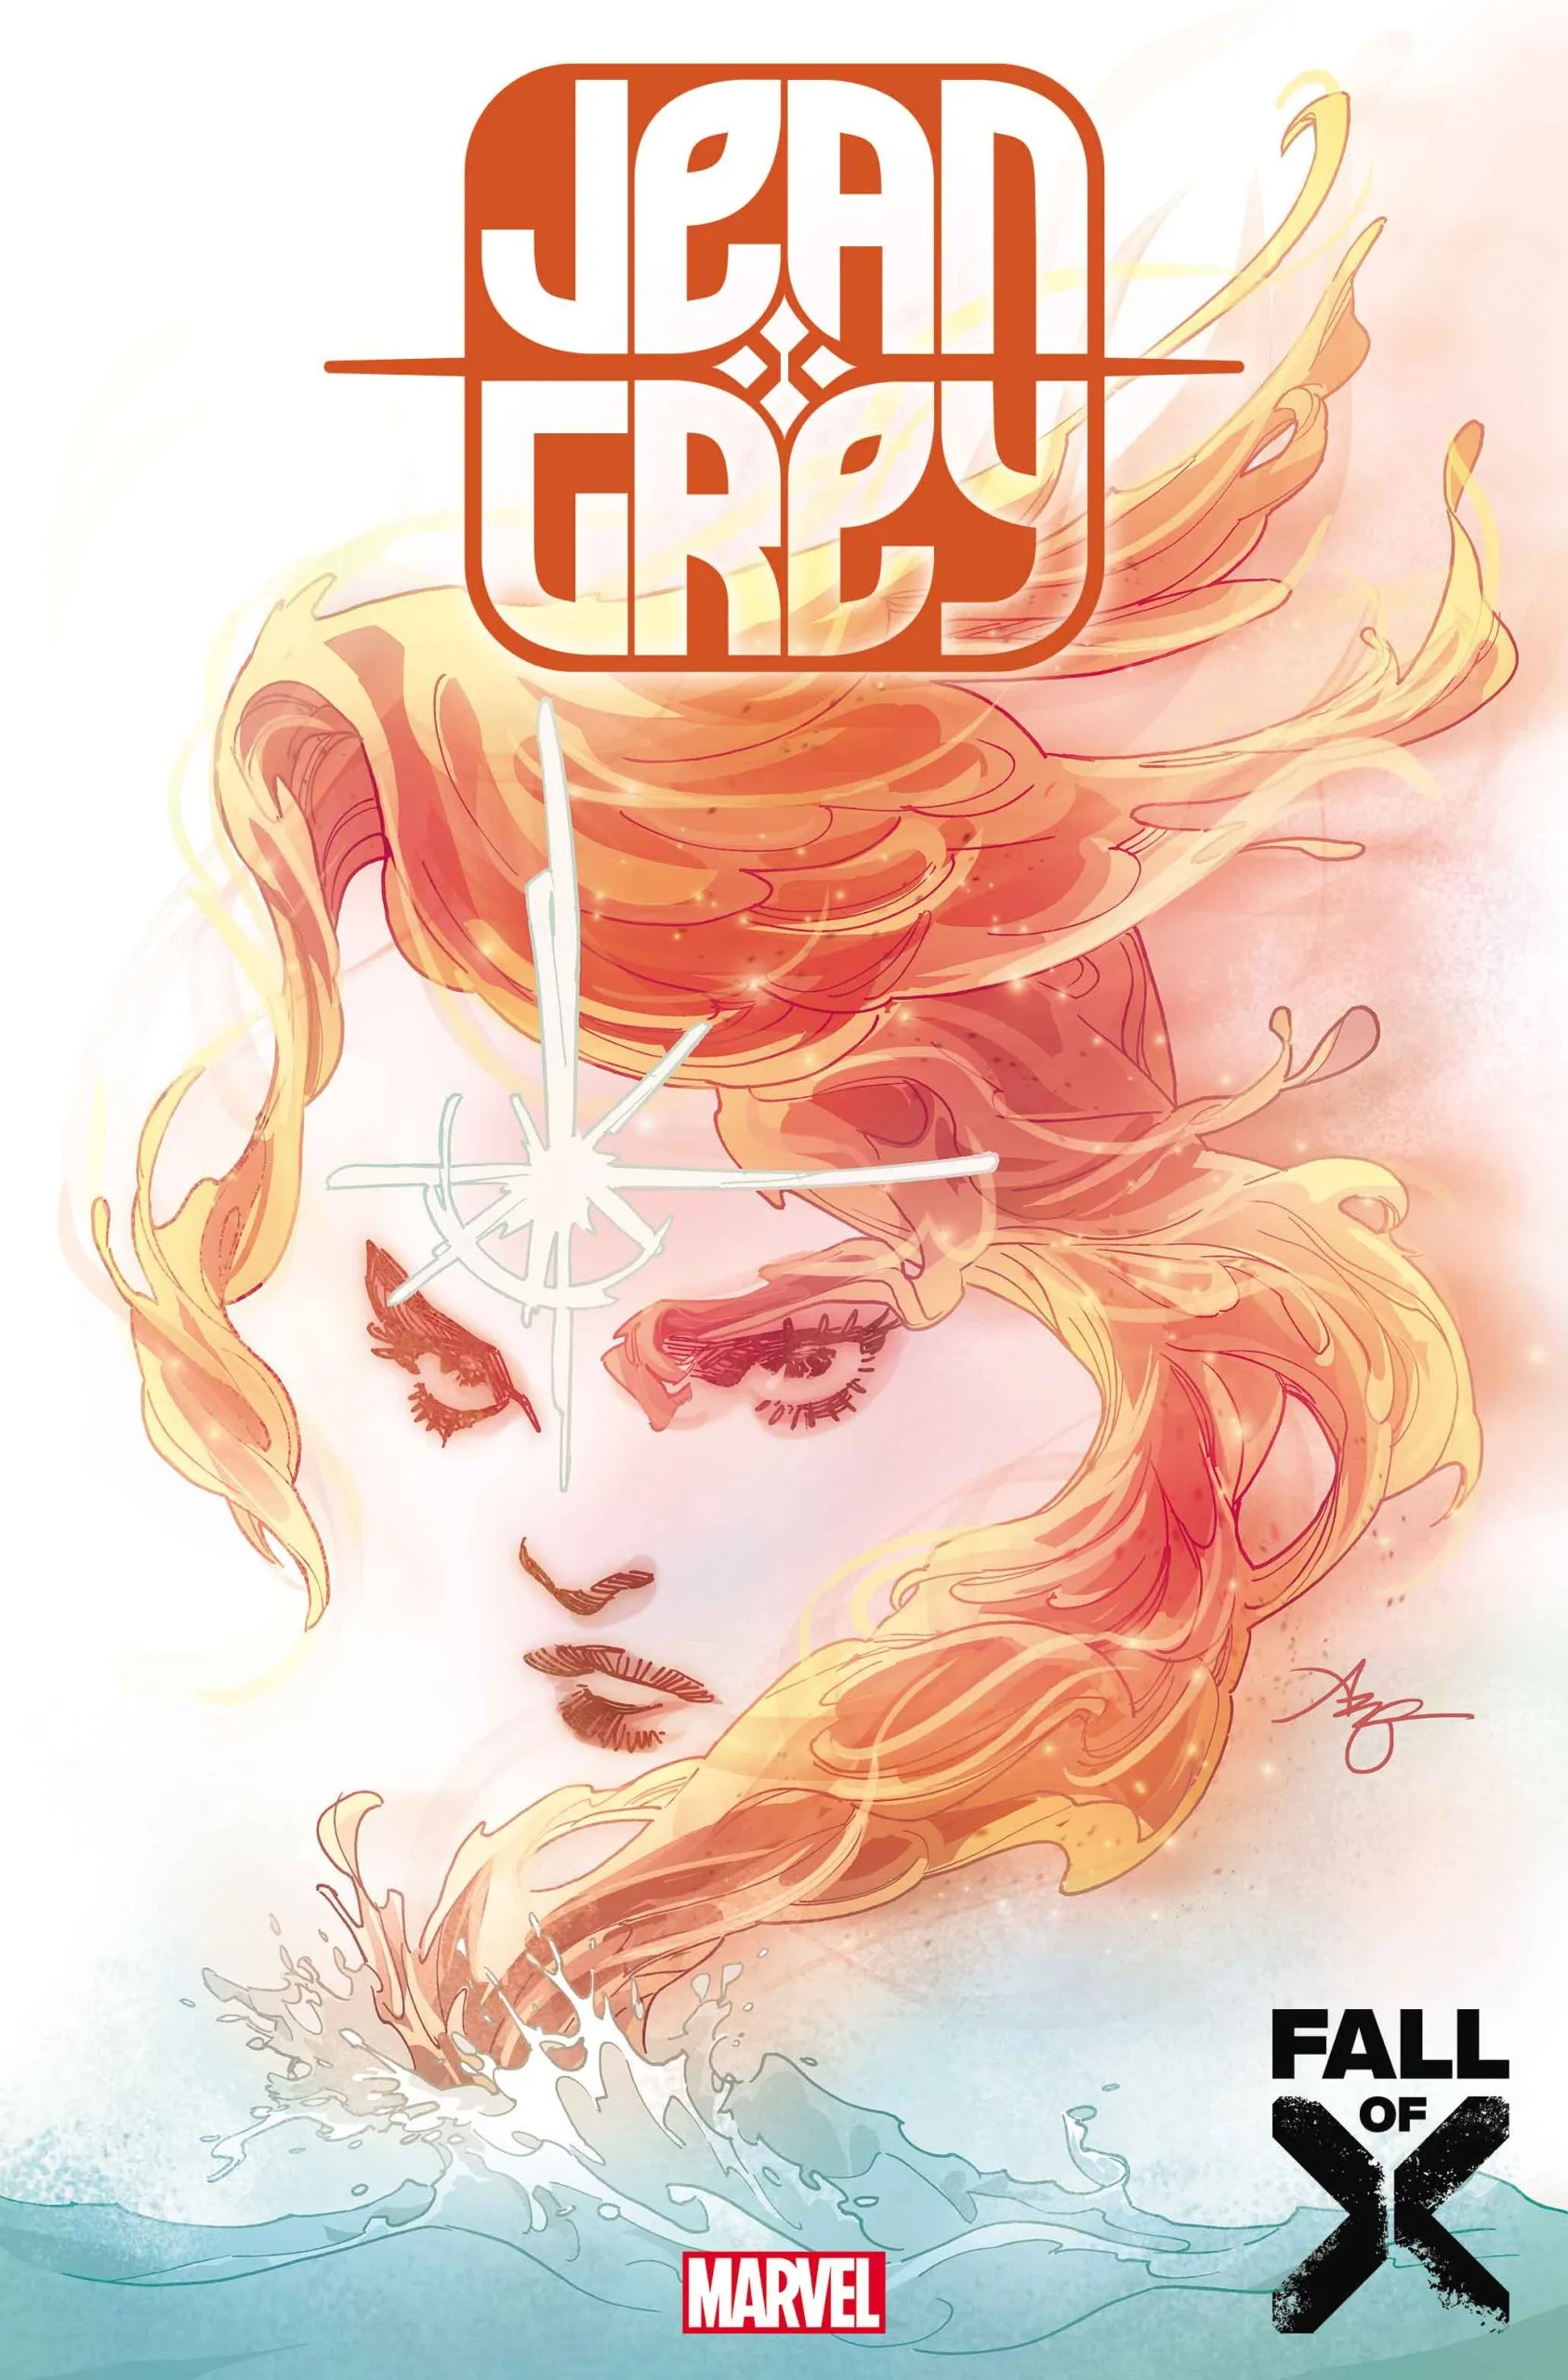 Jean Grey #1 A